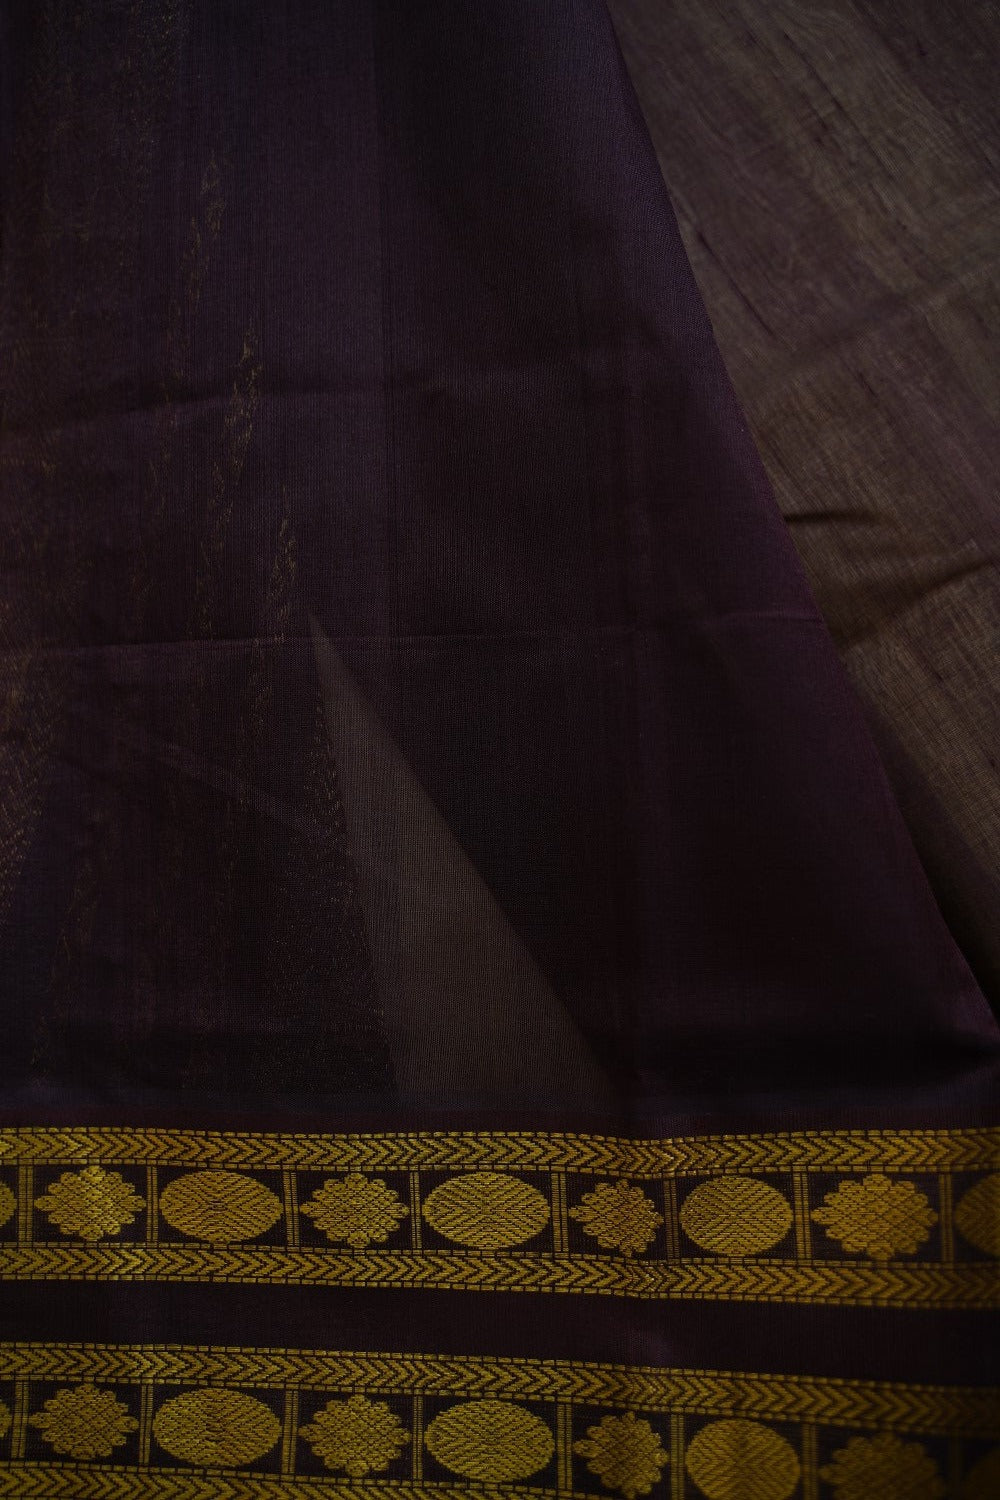 Sandal  Kanchi  Silk Cotton Saree With Zari Border PC10743